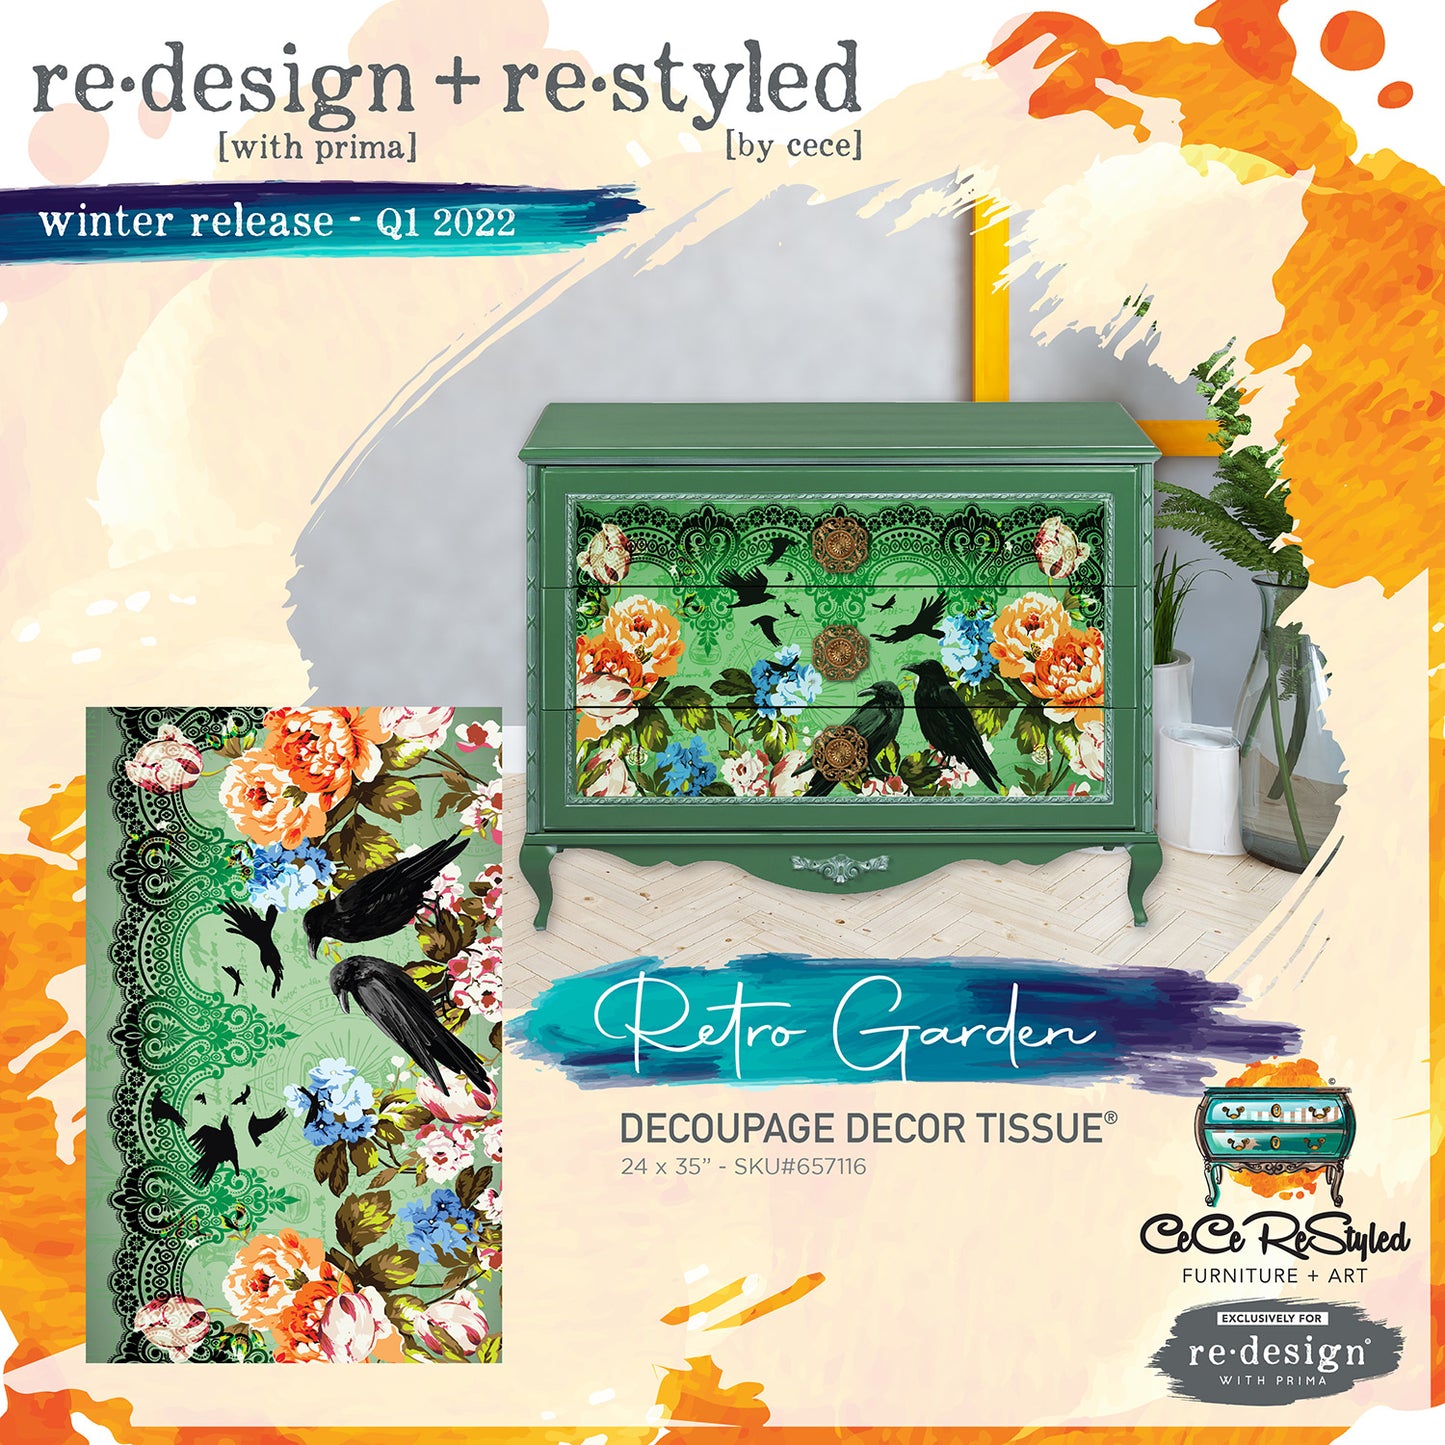 CeCe Retro Garden - Redesign Decoupage Decor Tissue Paper